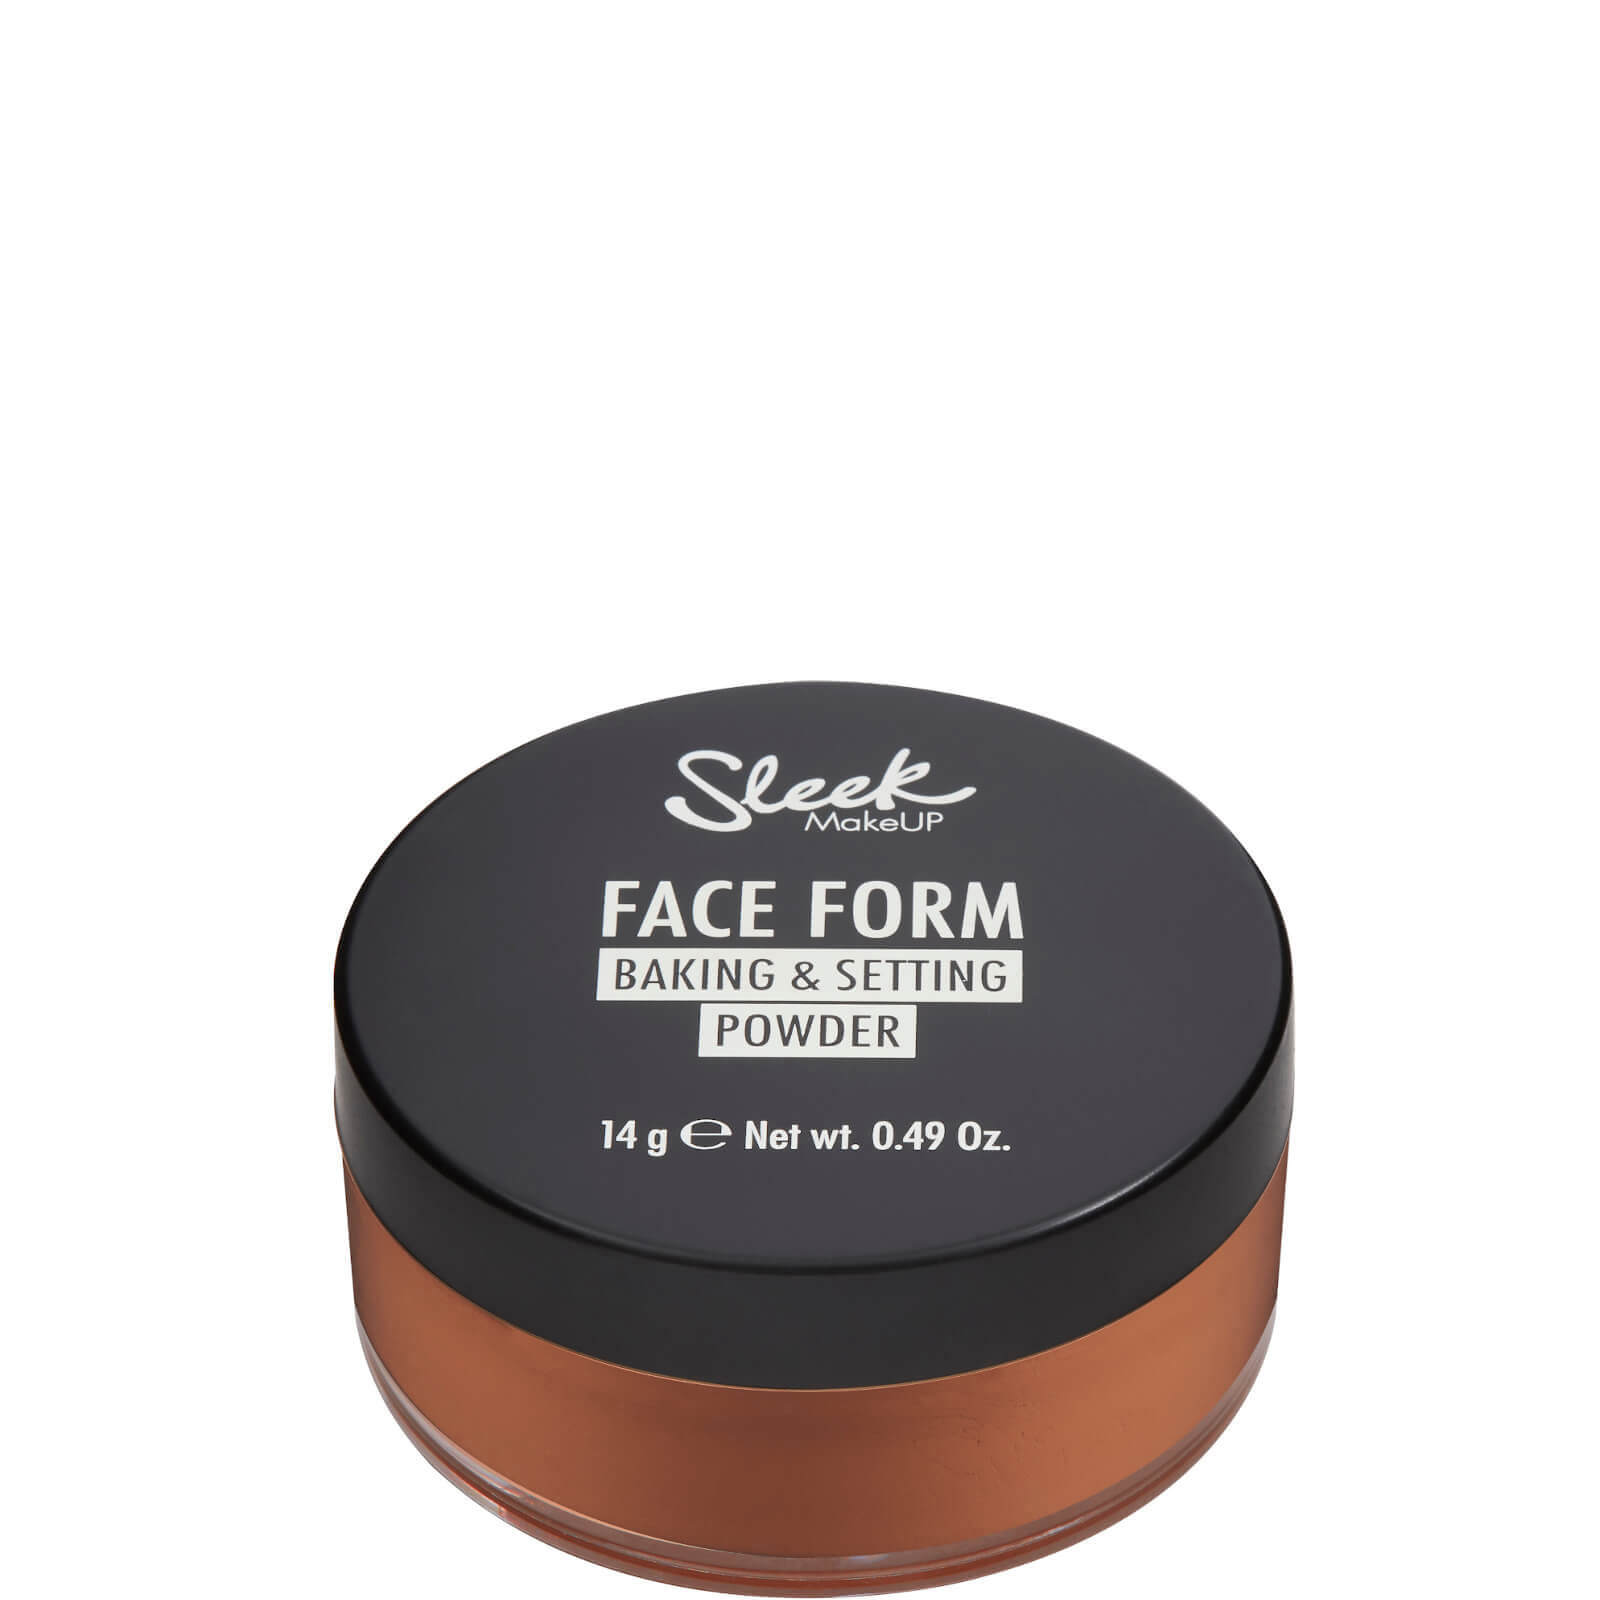 Sleek MakeUP Face Form Baking and Setting Powder - Deep von Sleek MakeUP